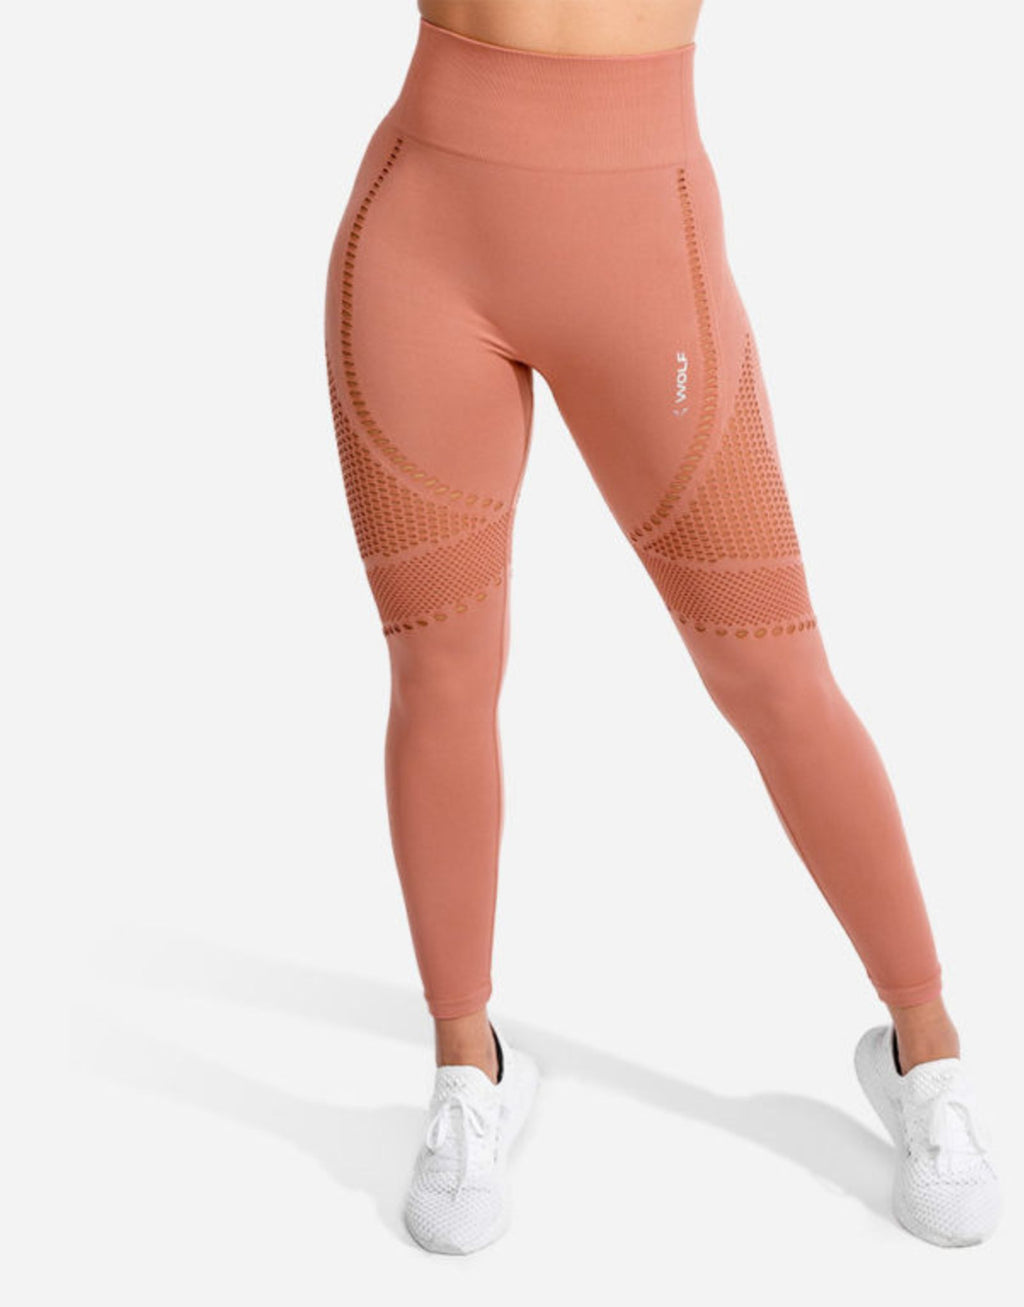 Nike Training one tight leggings in burgundy